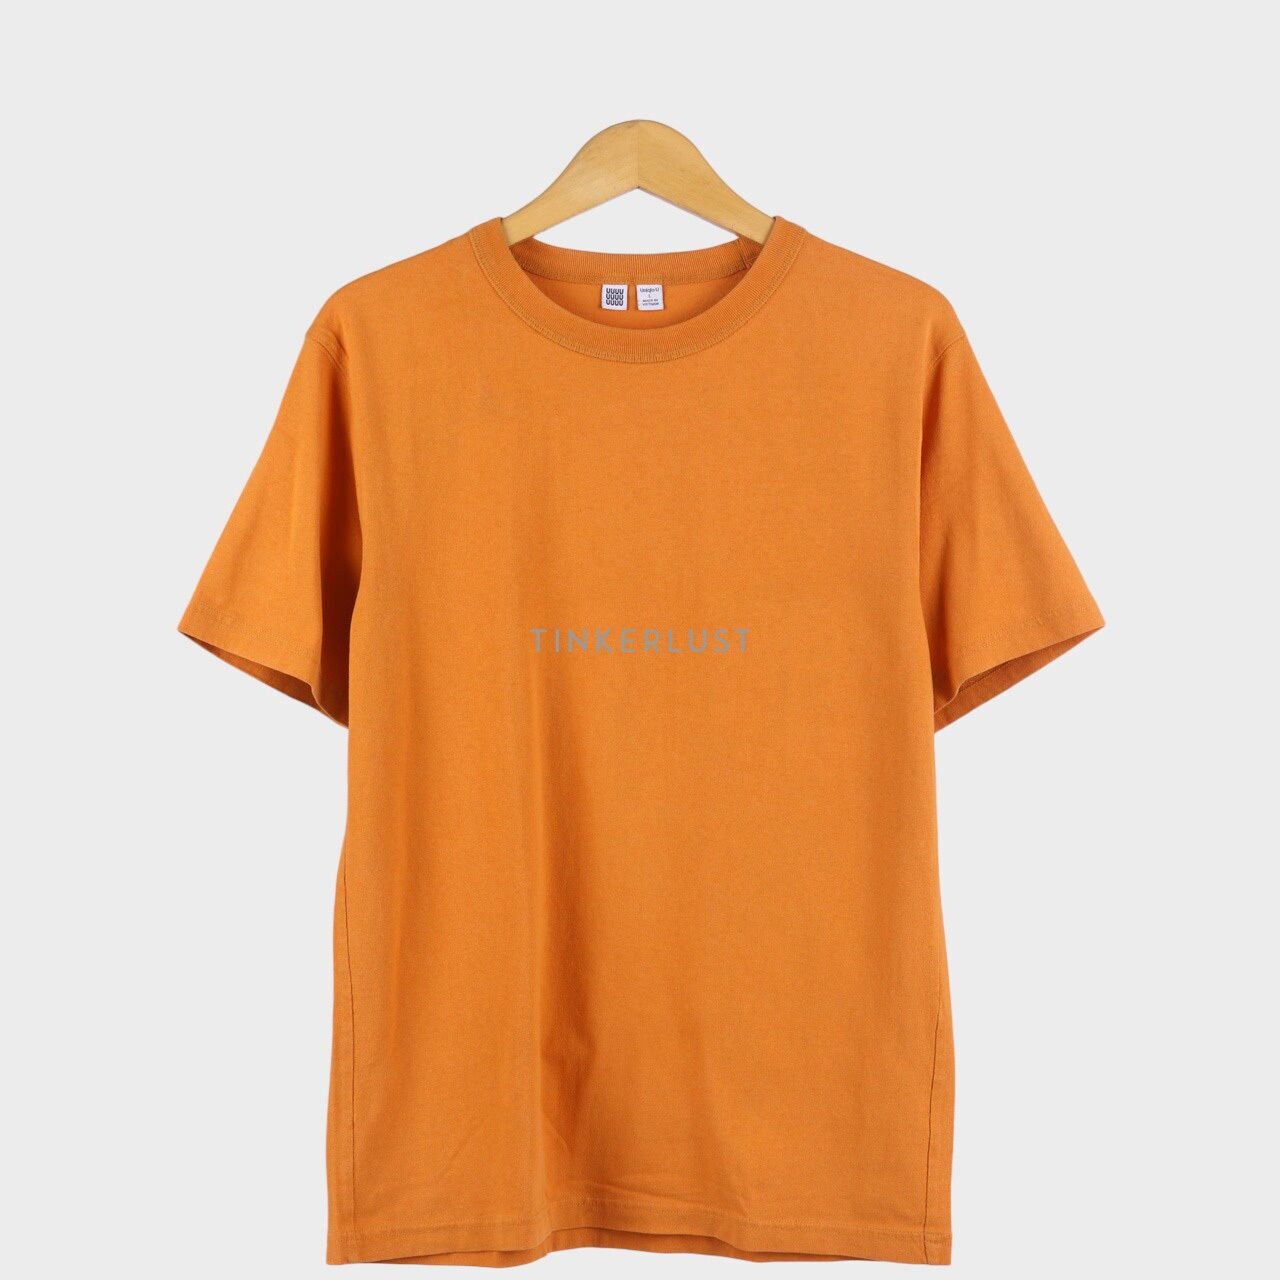 UNIQLO Orange T-Shirt